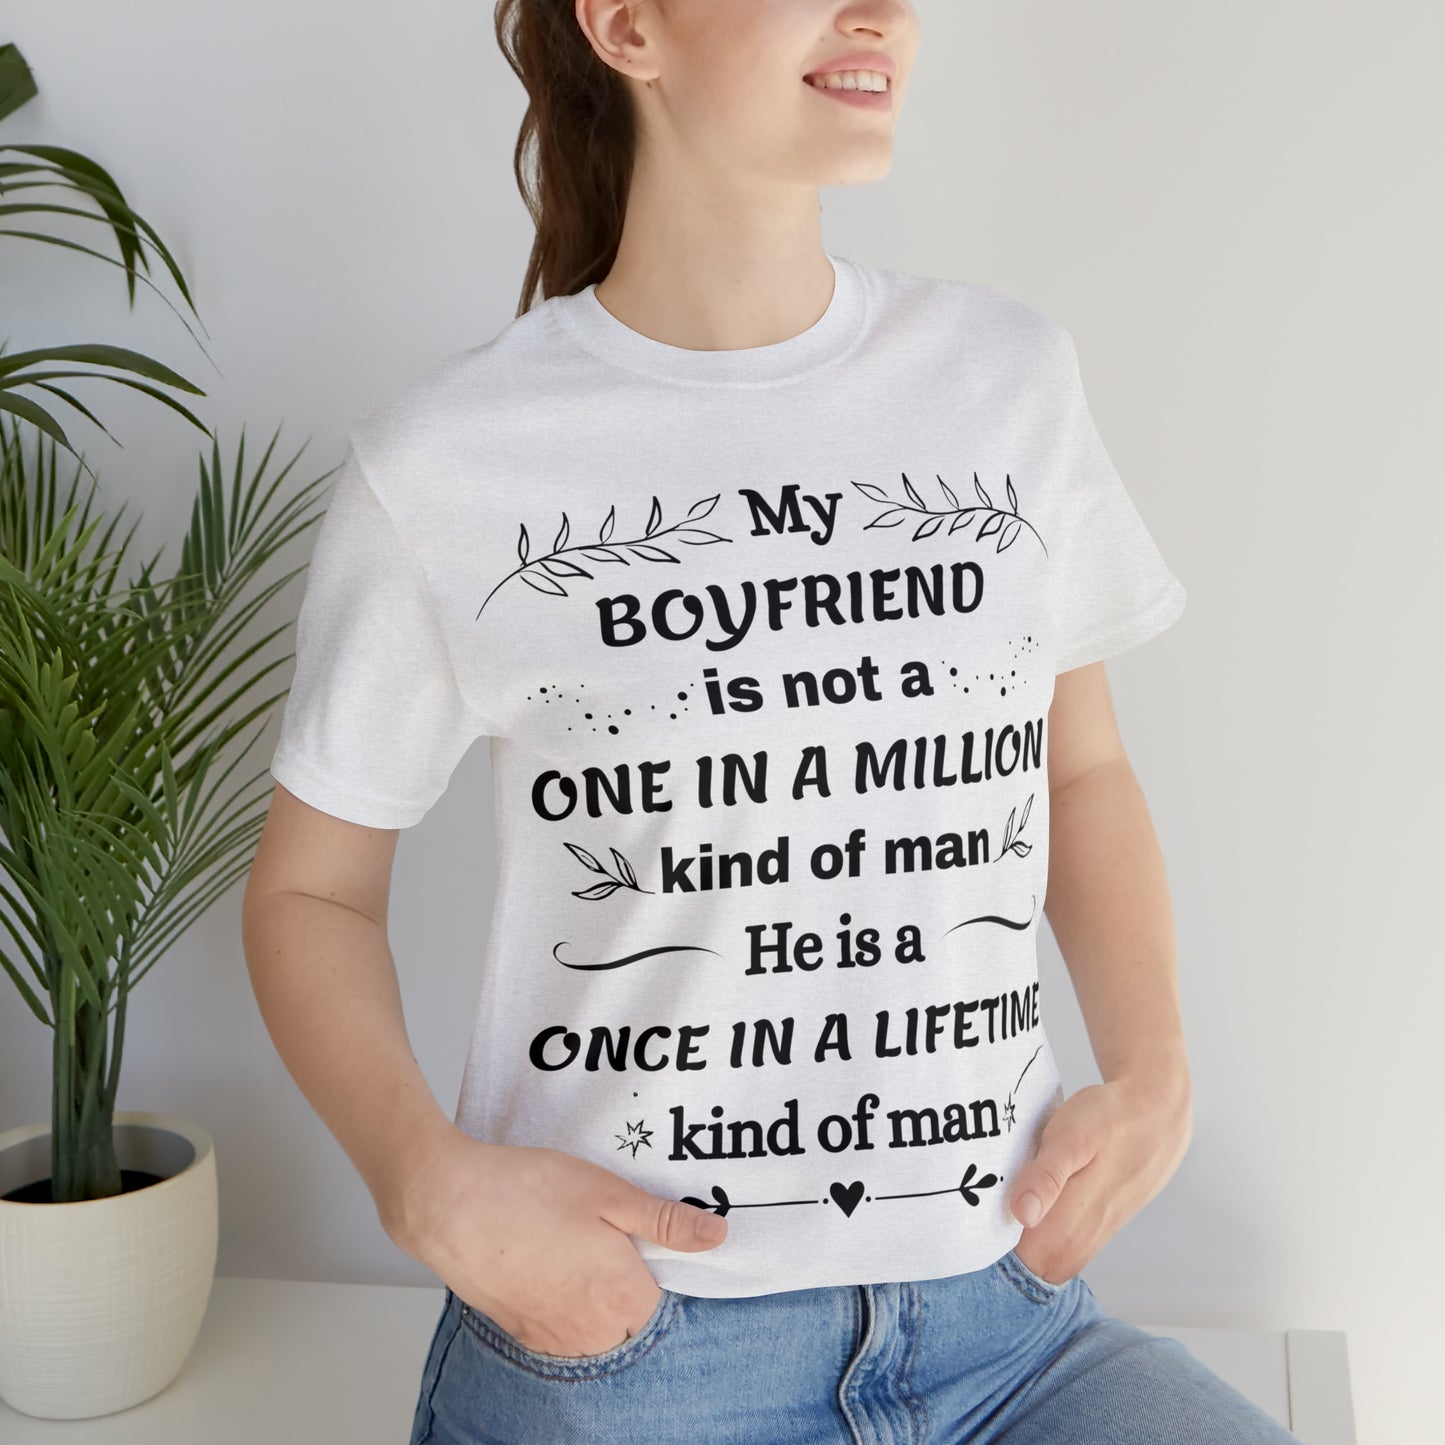 Once in a Lifetime Girlfriend & Boyfriend Matching T-Shirts - Heartfelt Love Quote